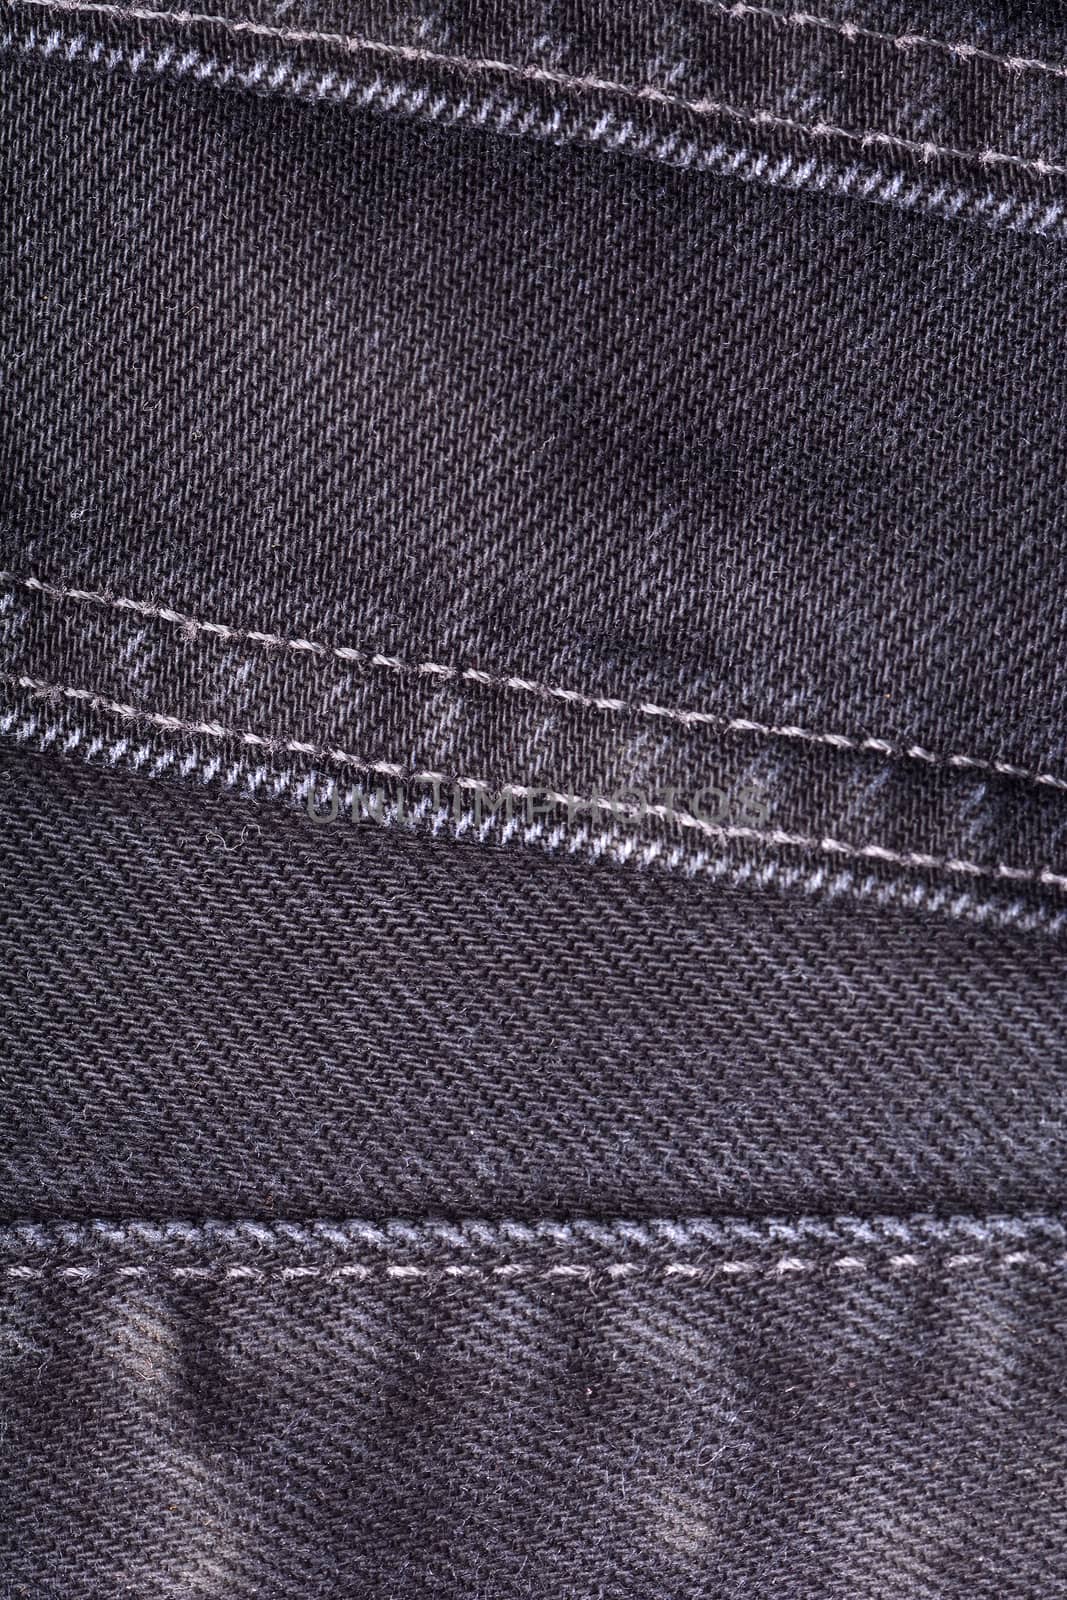 denim jeans background with seam of jeans fashion design. Old grunge vintage denim jean